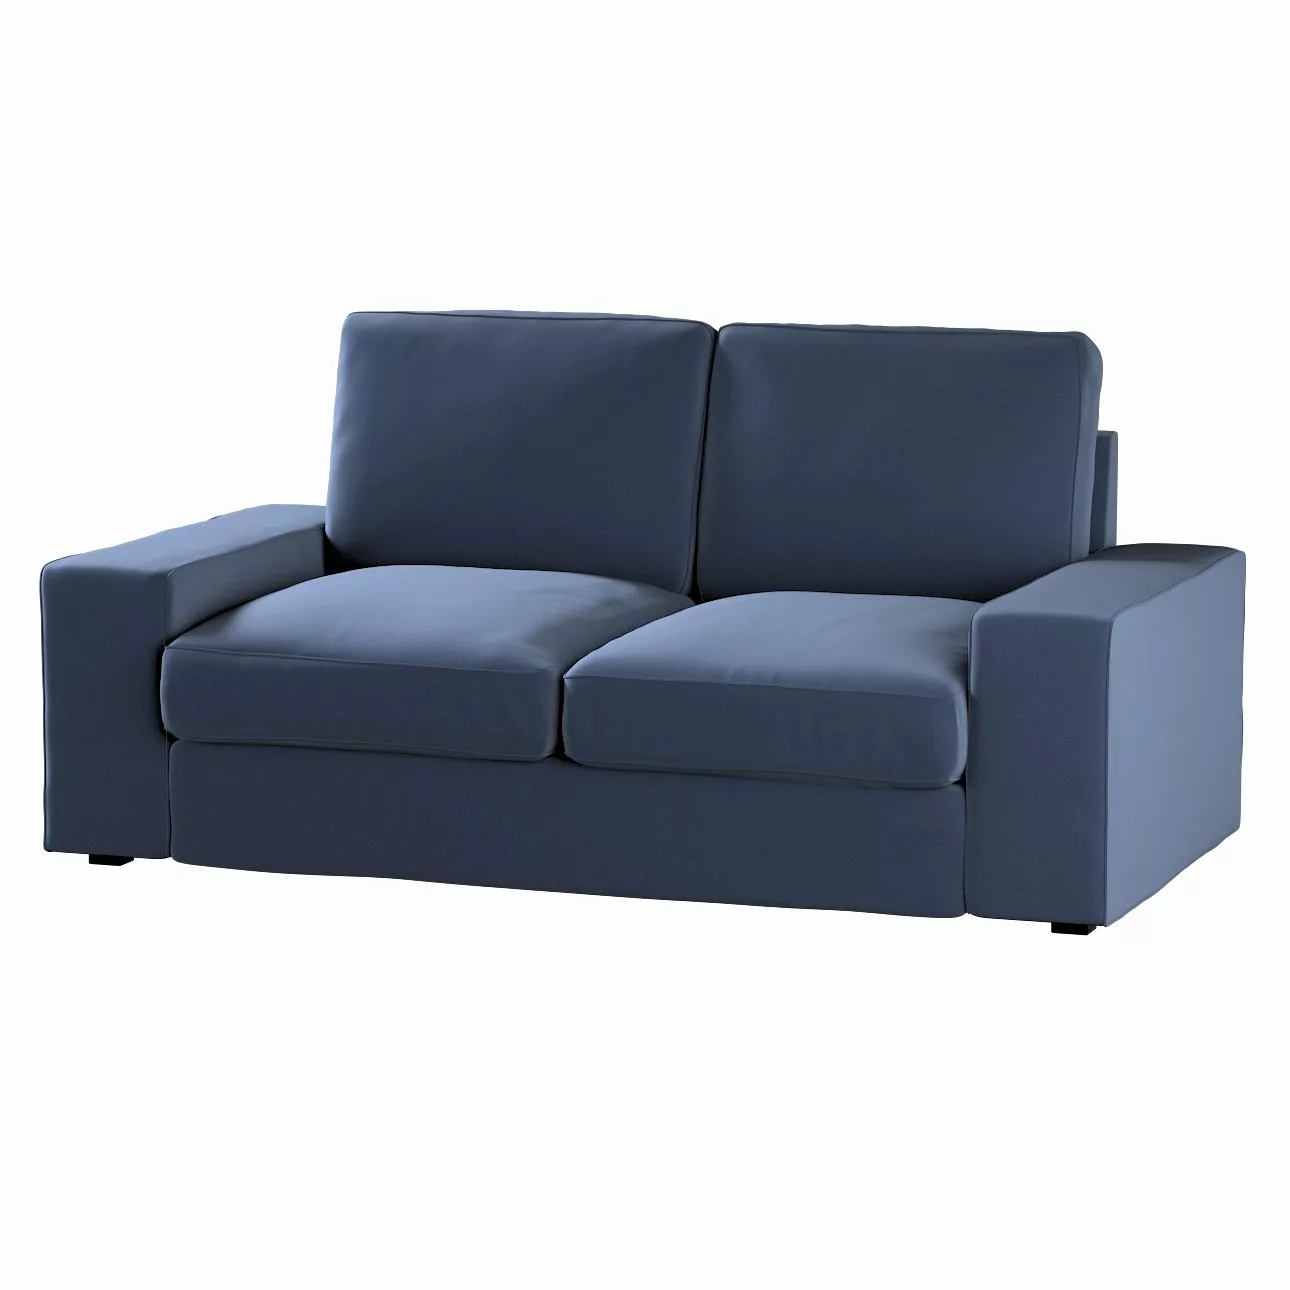 Bezug für Kivik 2-Sitzer Sofa, dunkelblau, Bezug für Sofa Kivik 2-Sitzer, I günstig online kaufen